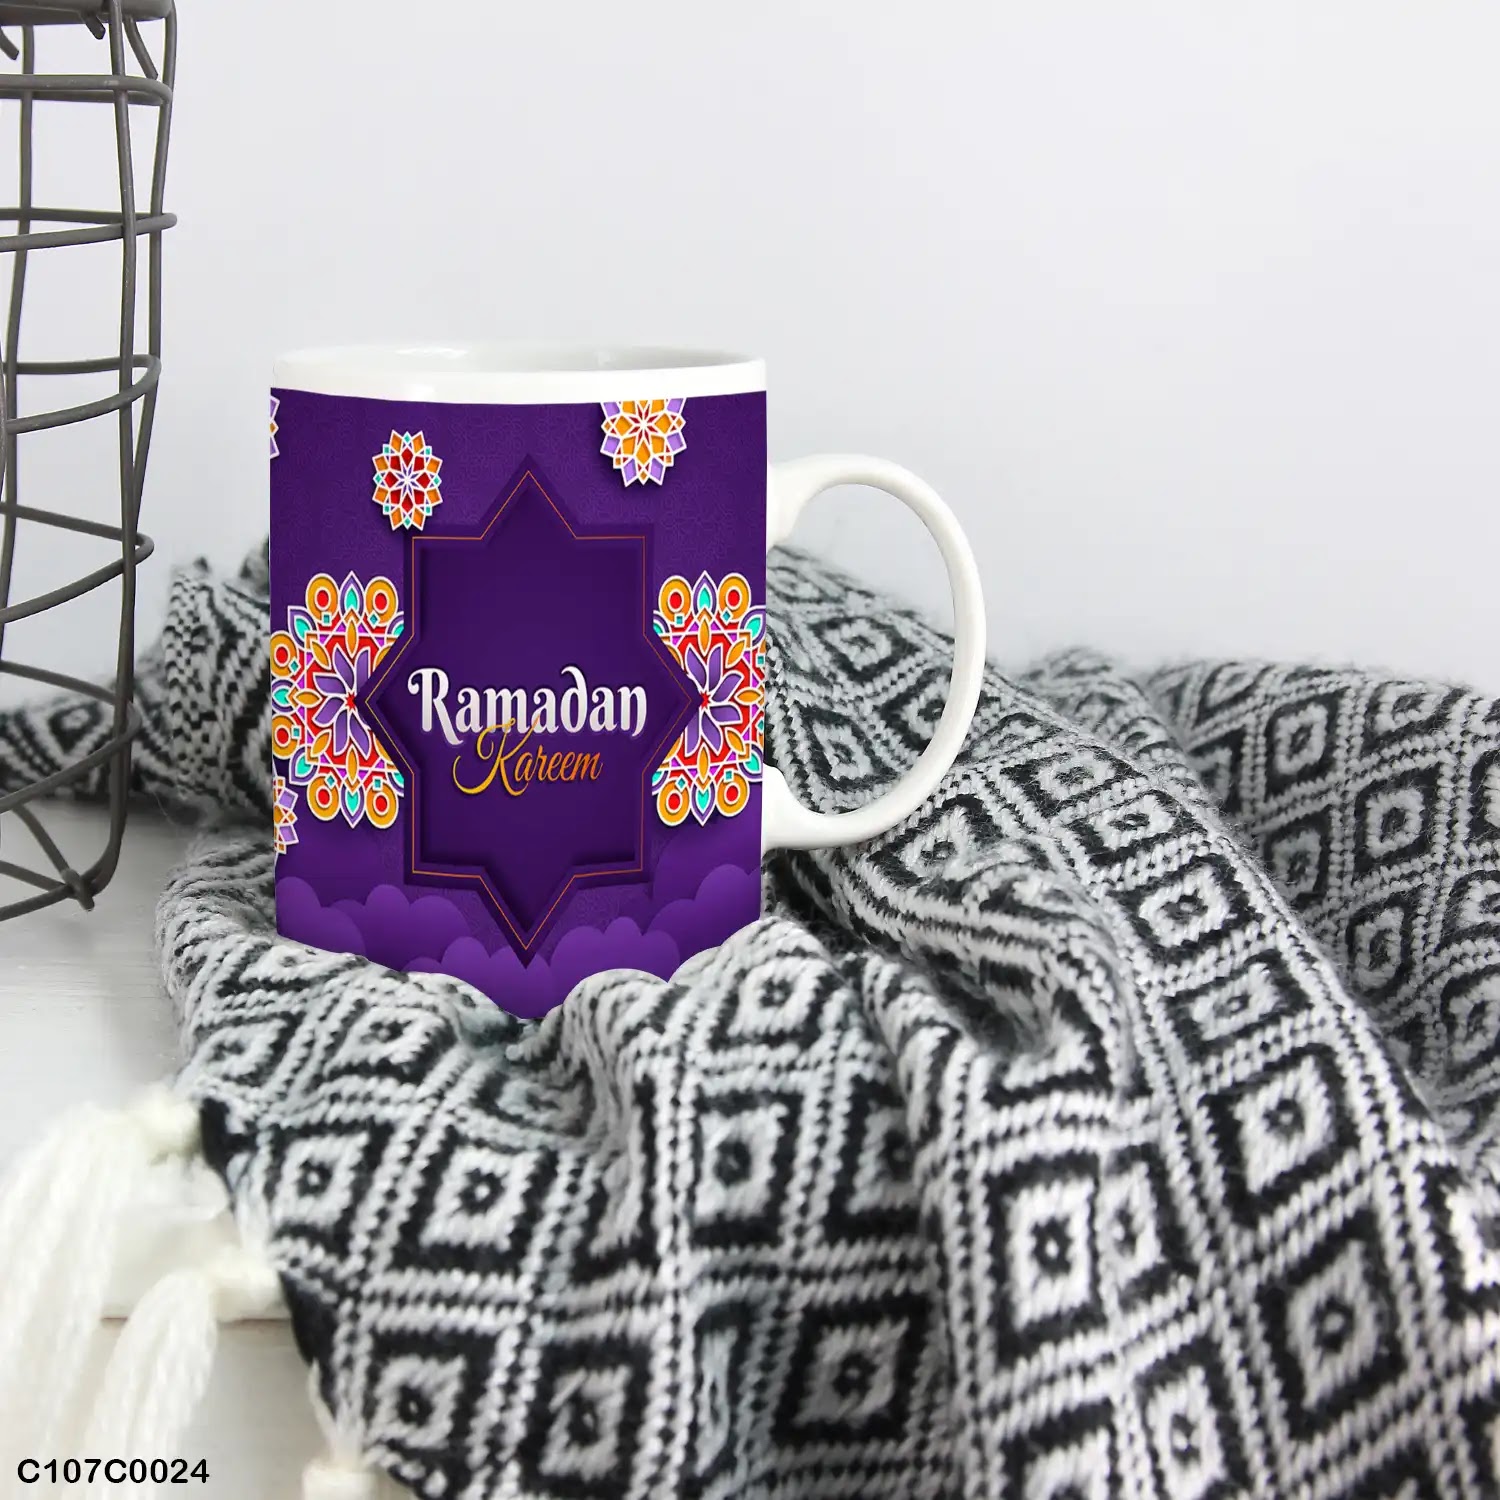 Violet printed mug (cup) for Ramadan